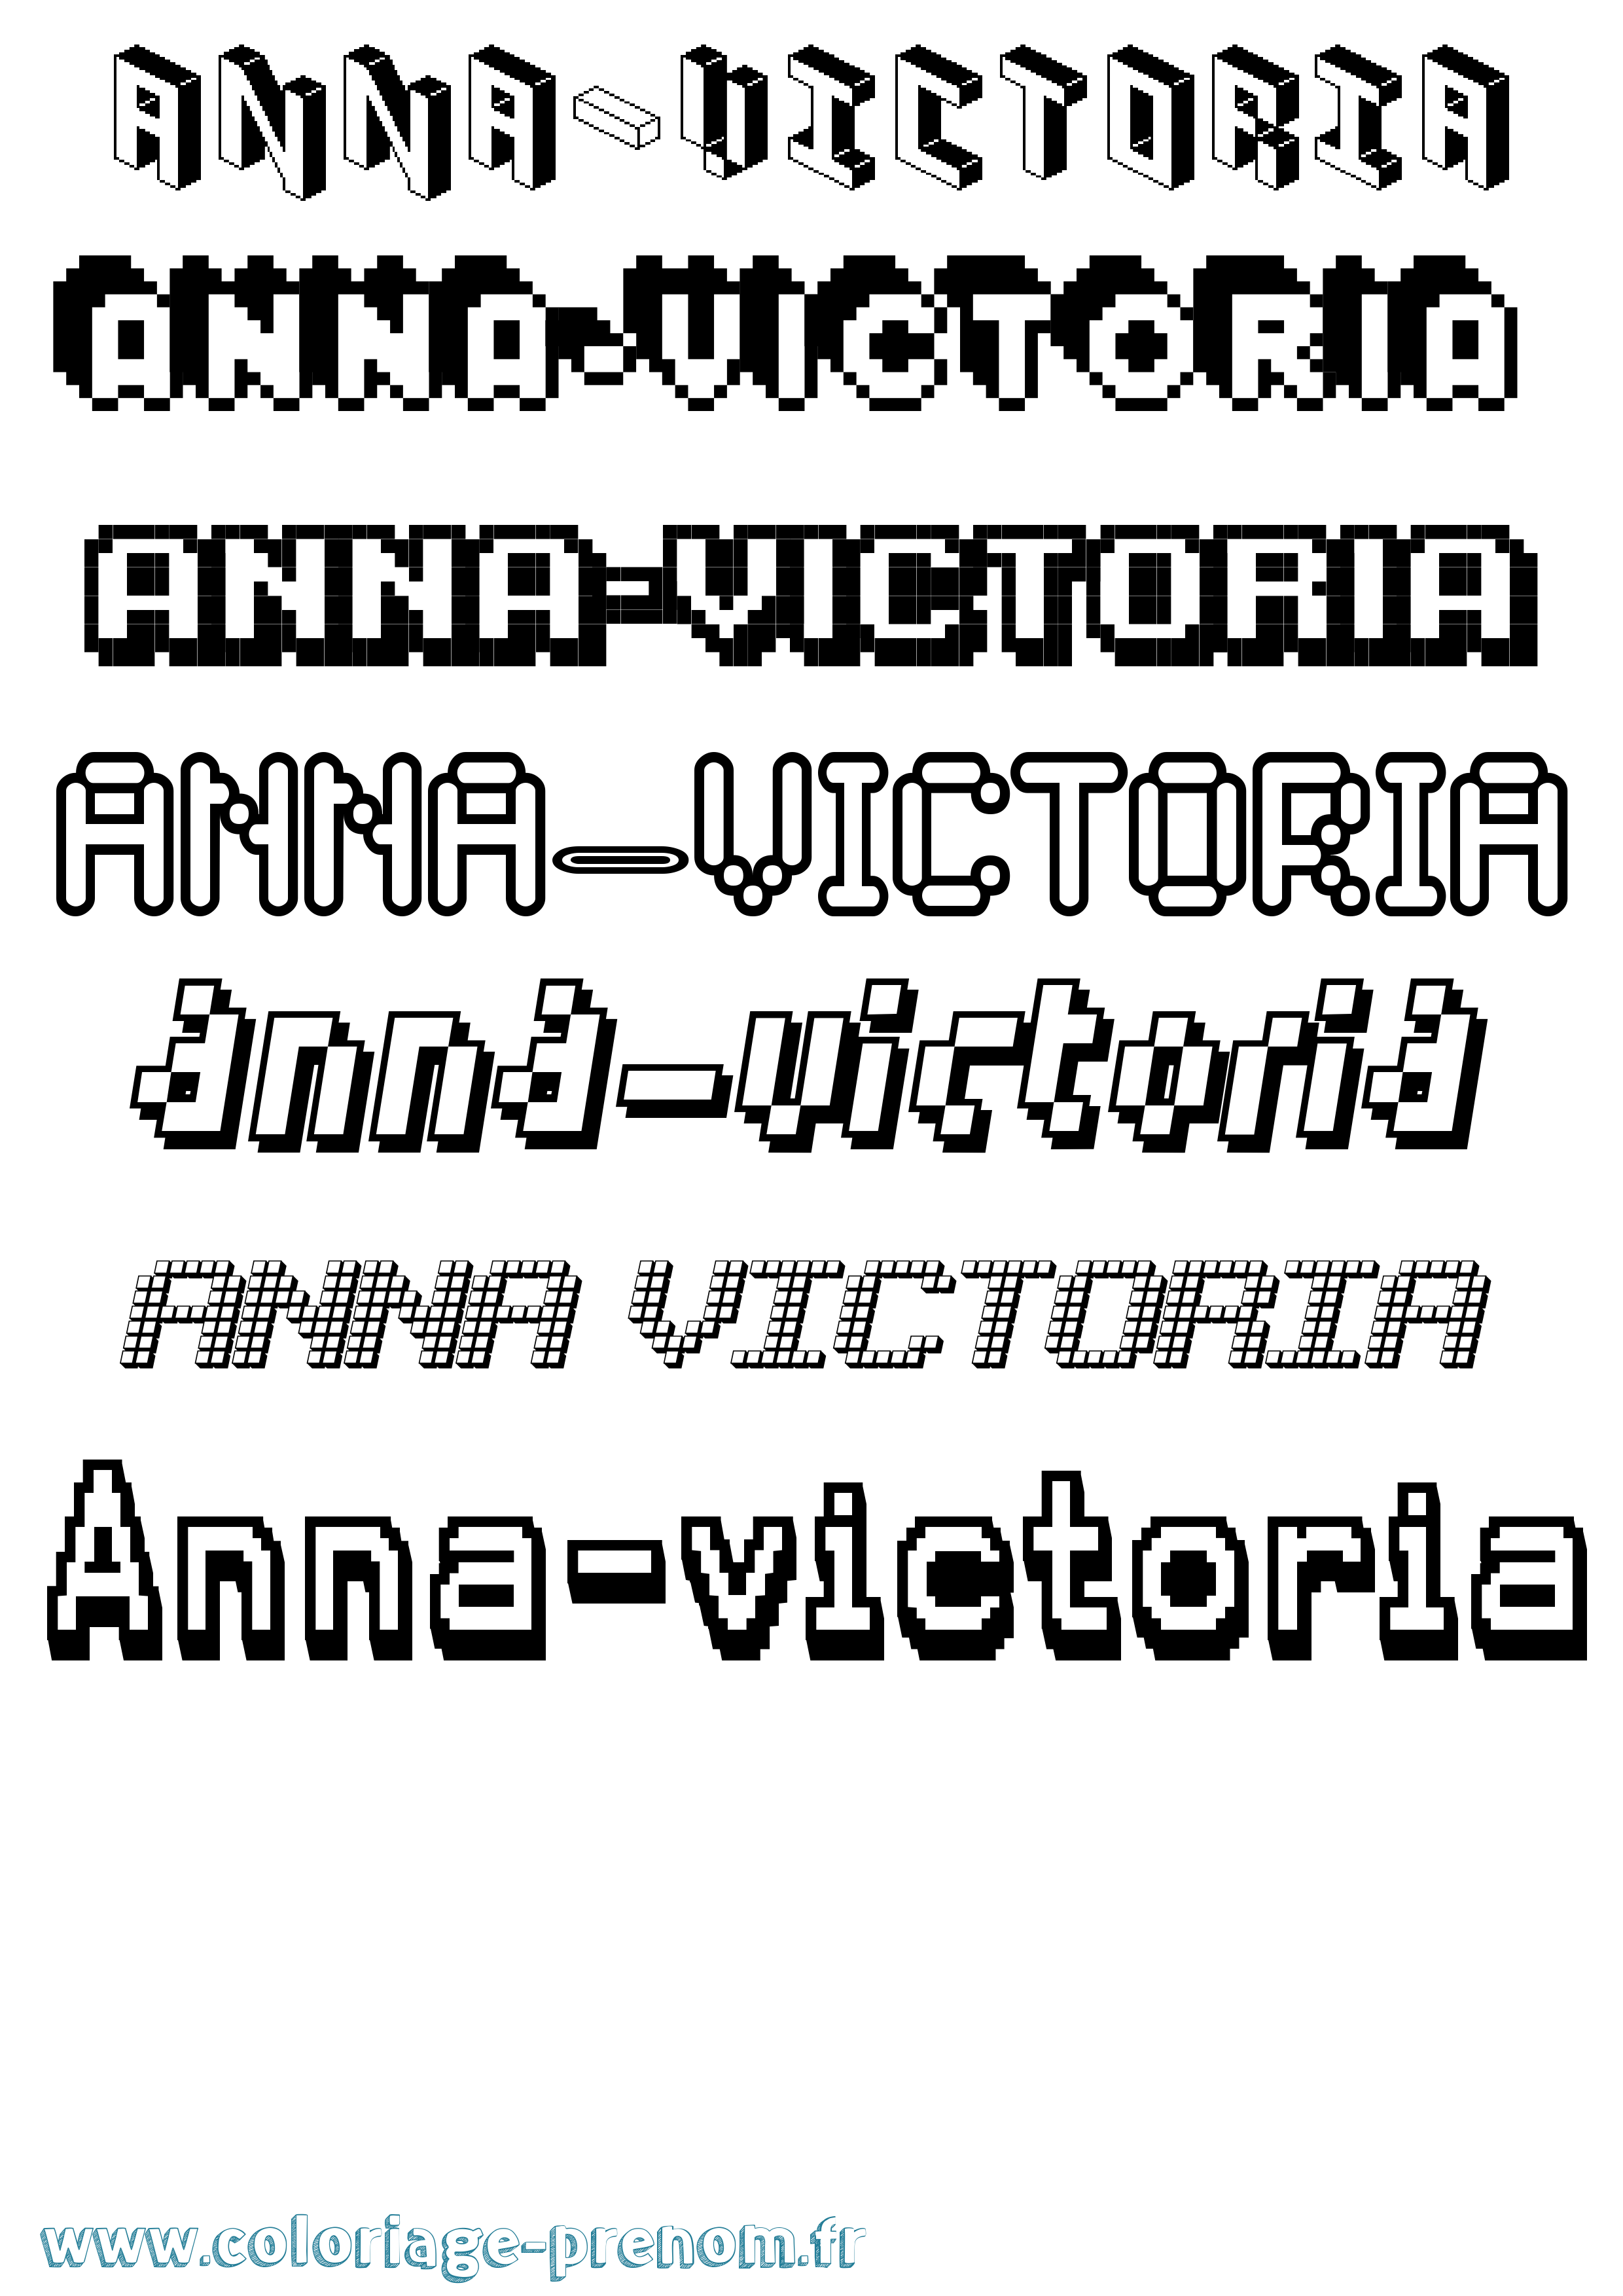 Coloriage prénom Anna-Victoria Pixel